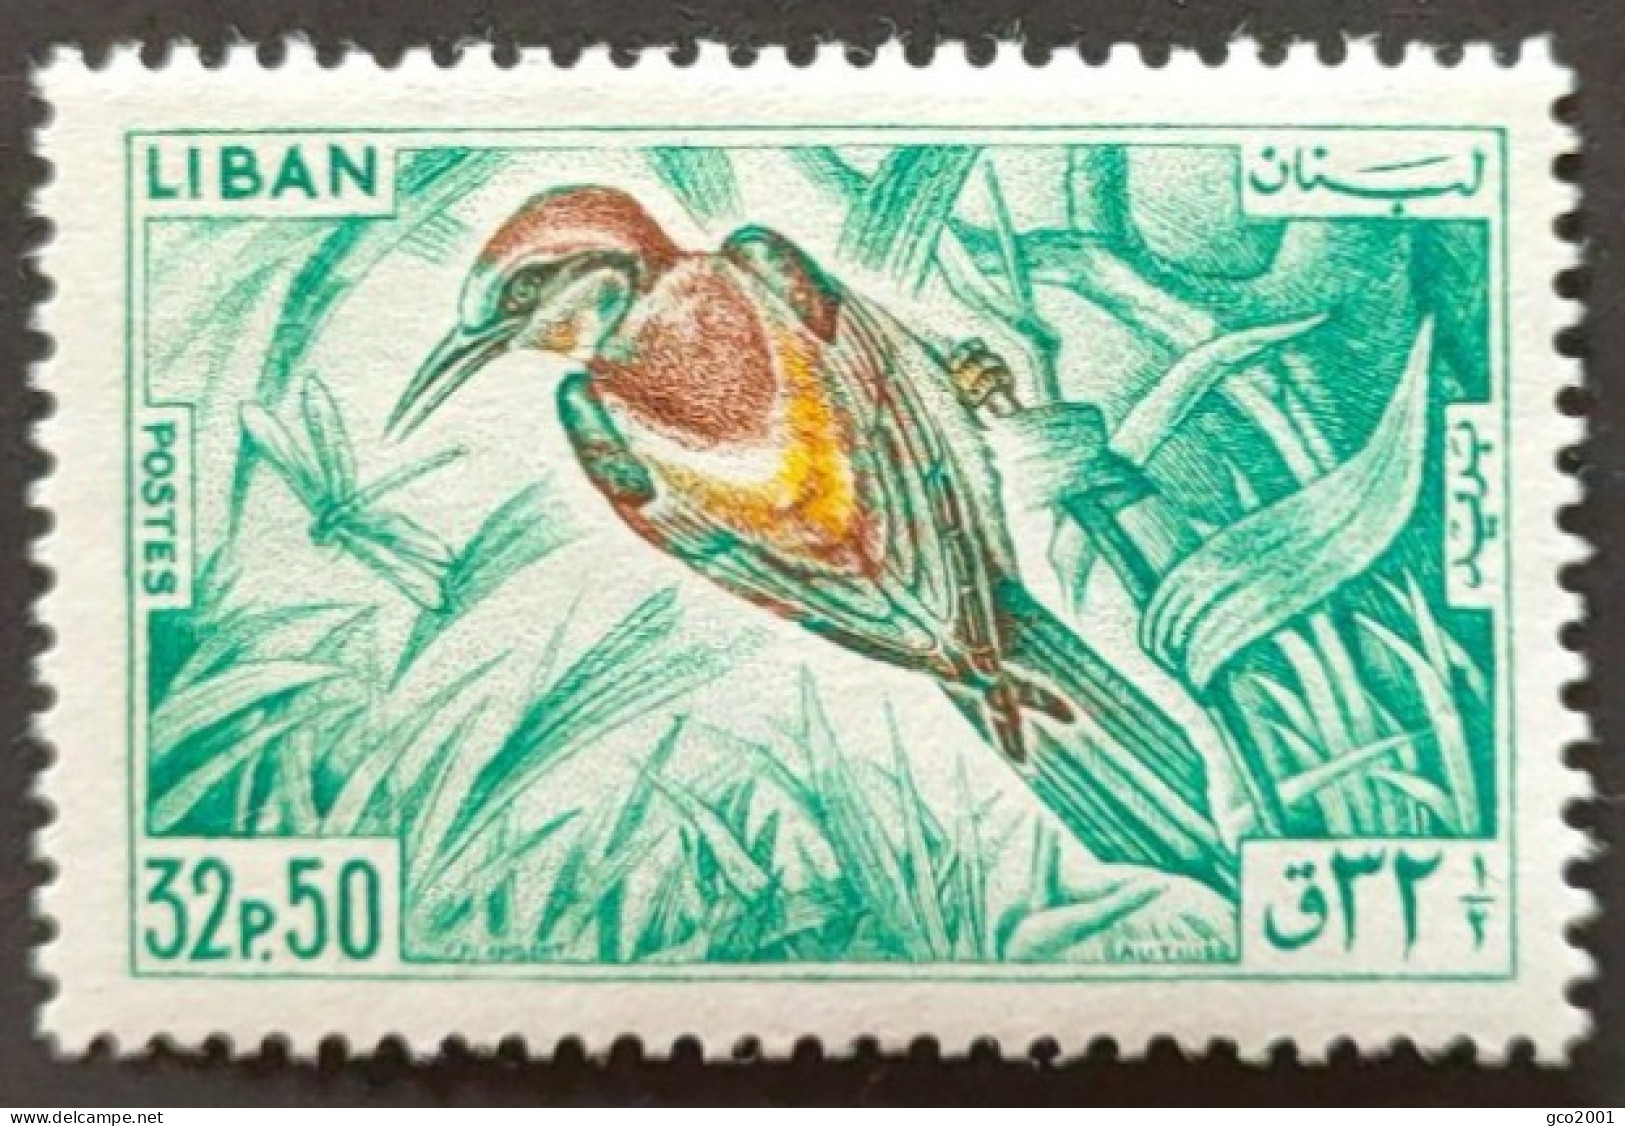 LIBAN / YT 255 / FAUNE - OISEAU - GUEPIER / NEUF ** / MNH - Sparrows